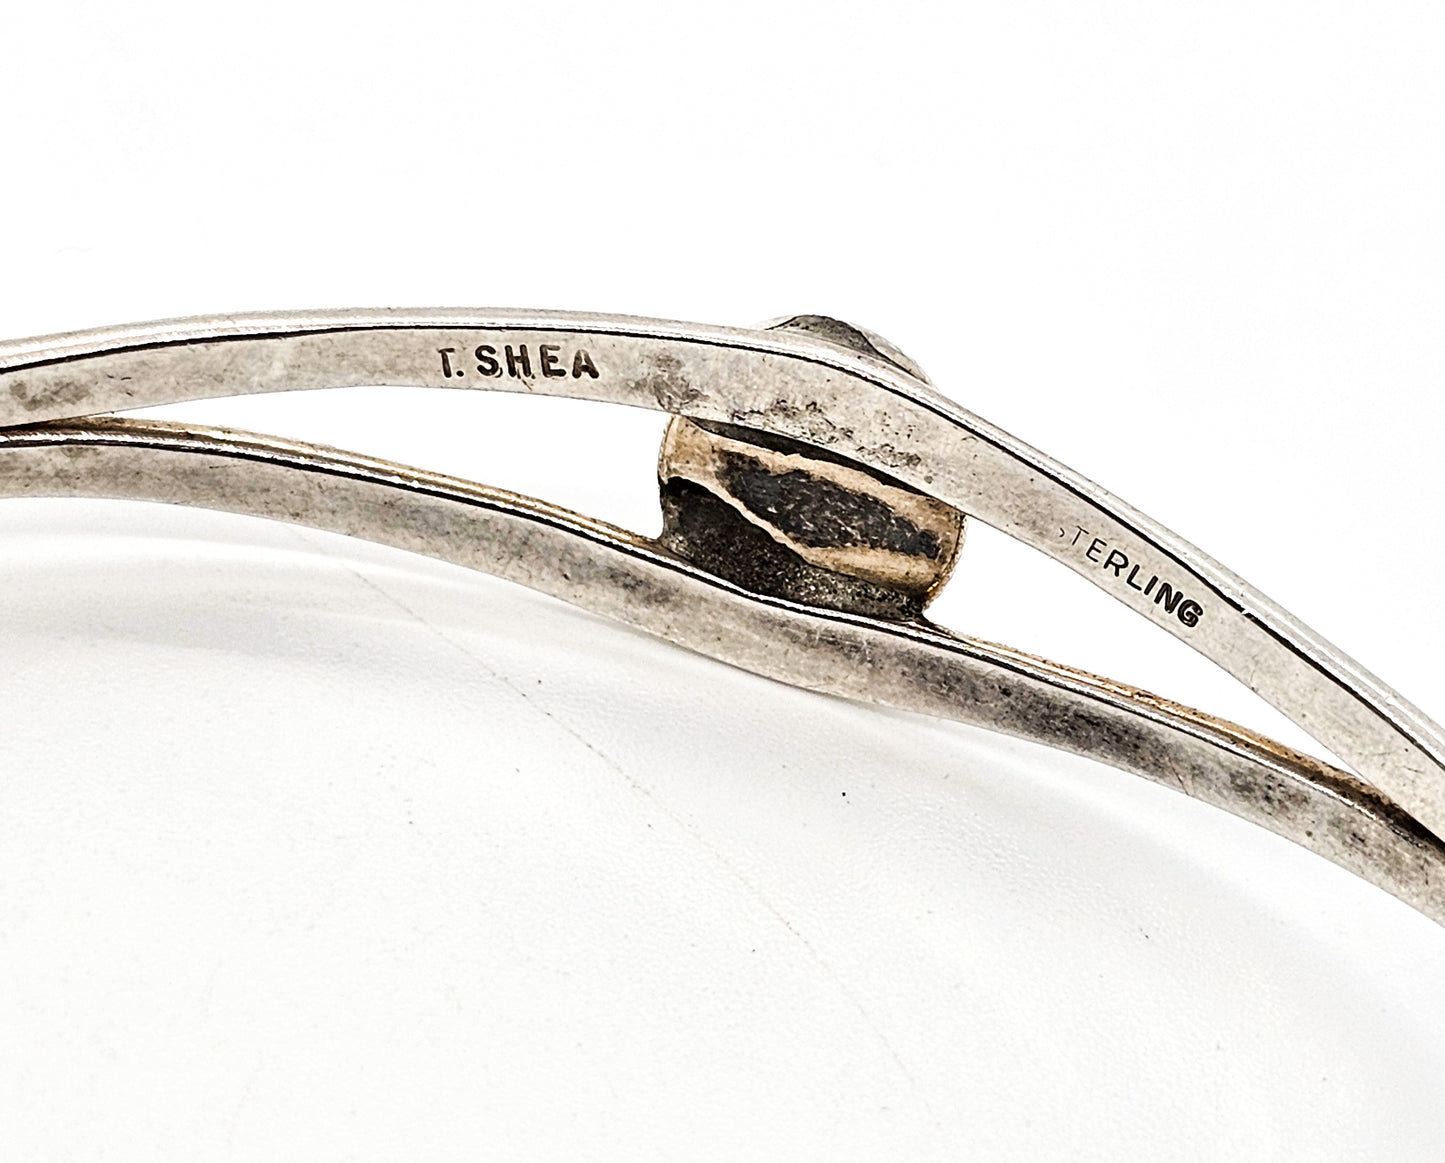 T. SHEA Sterling Silver Malachite Cuff Bracelet Designer Signed Ed Levin Apprentice